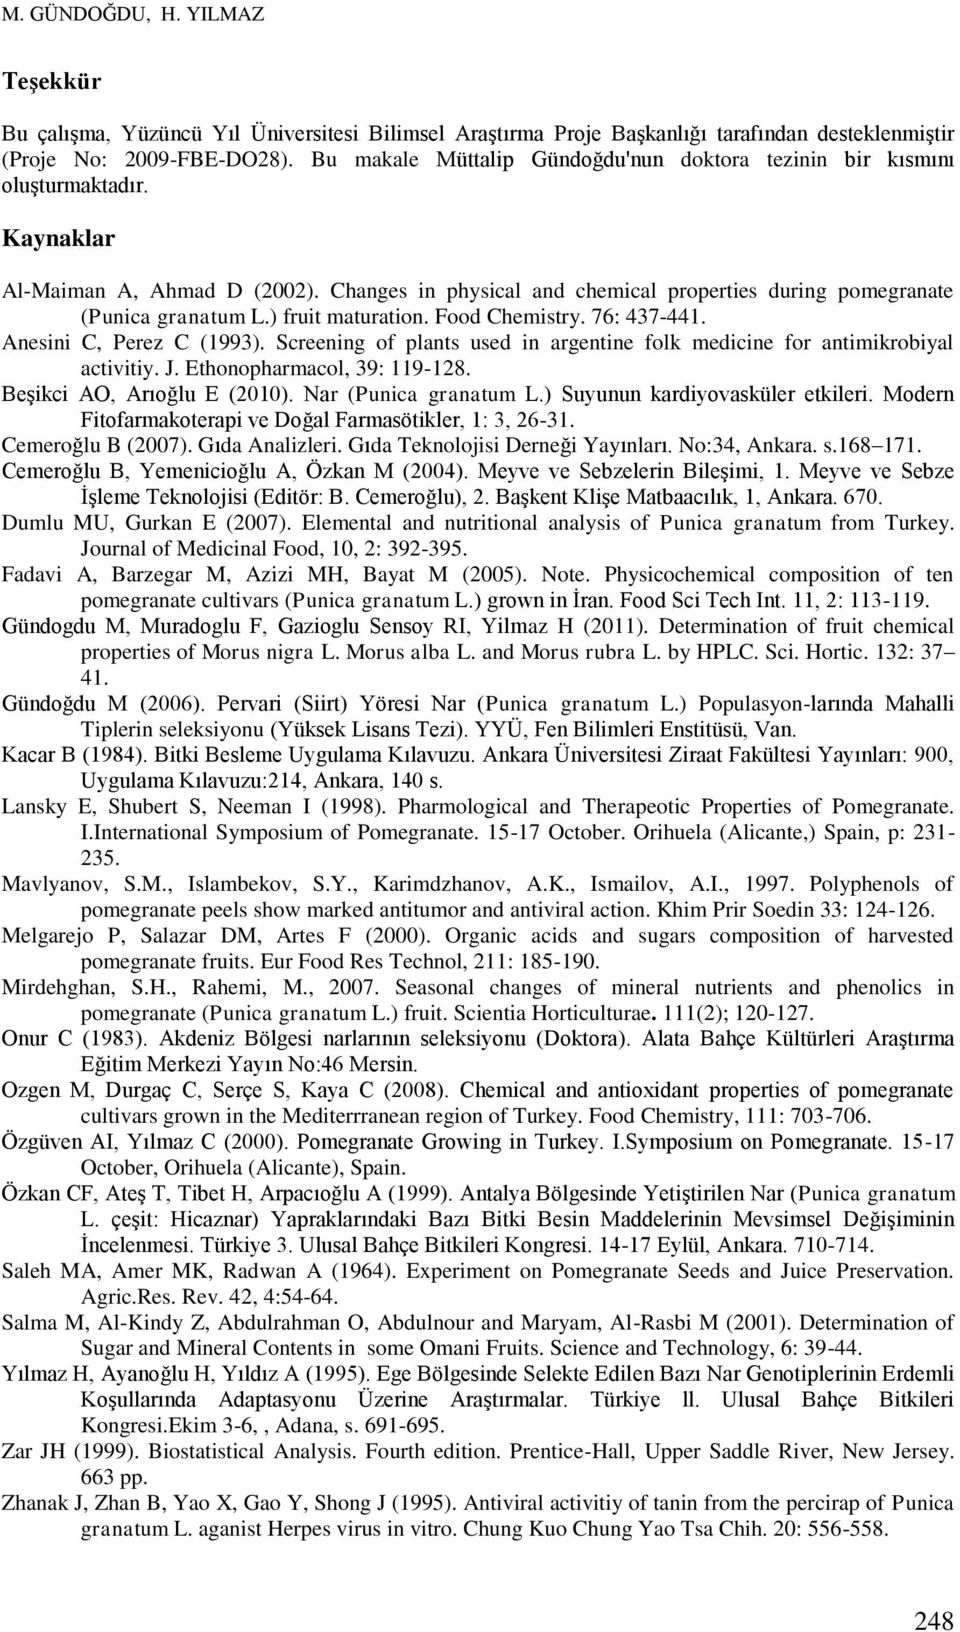 ) fruit maturation. Food Chemistry. 76: 437-441. Anesini C, Perez C (1993). Screening of plants used in argentine folk medicine for antimikrobiyal activitiy. J. Ethonopharmacol, 39: 119-128.